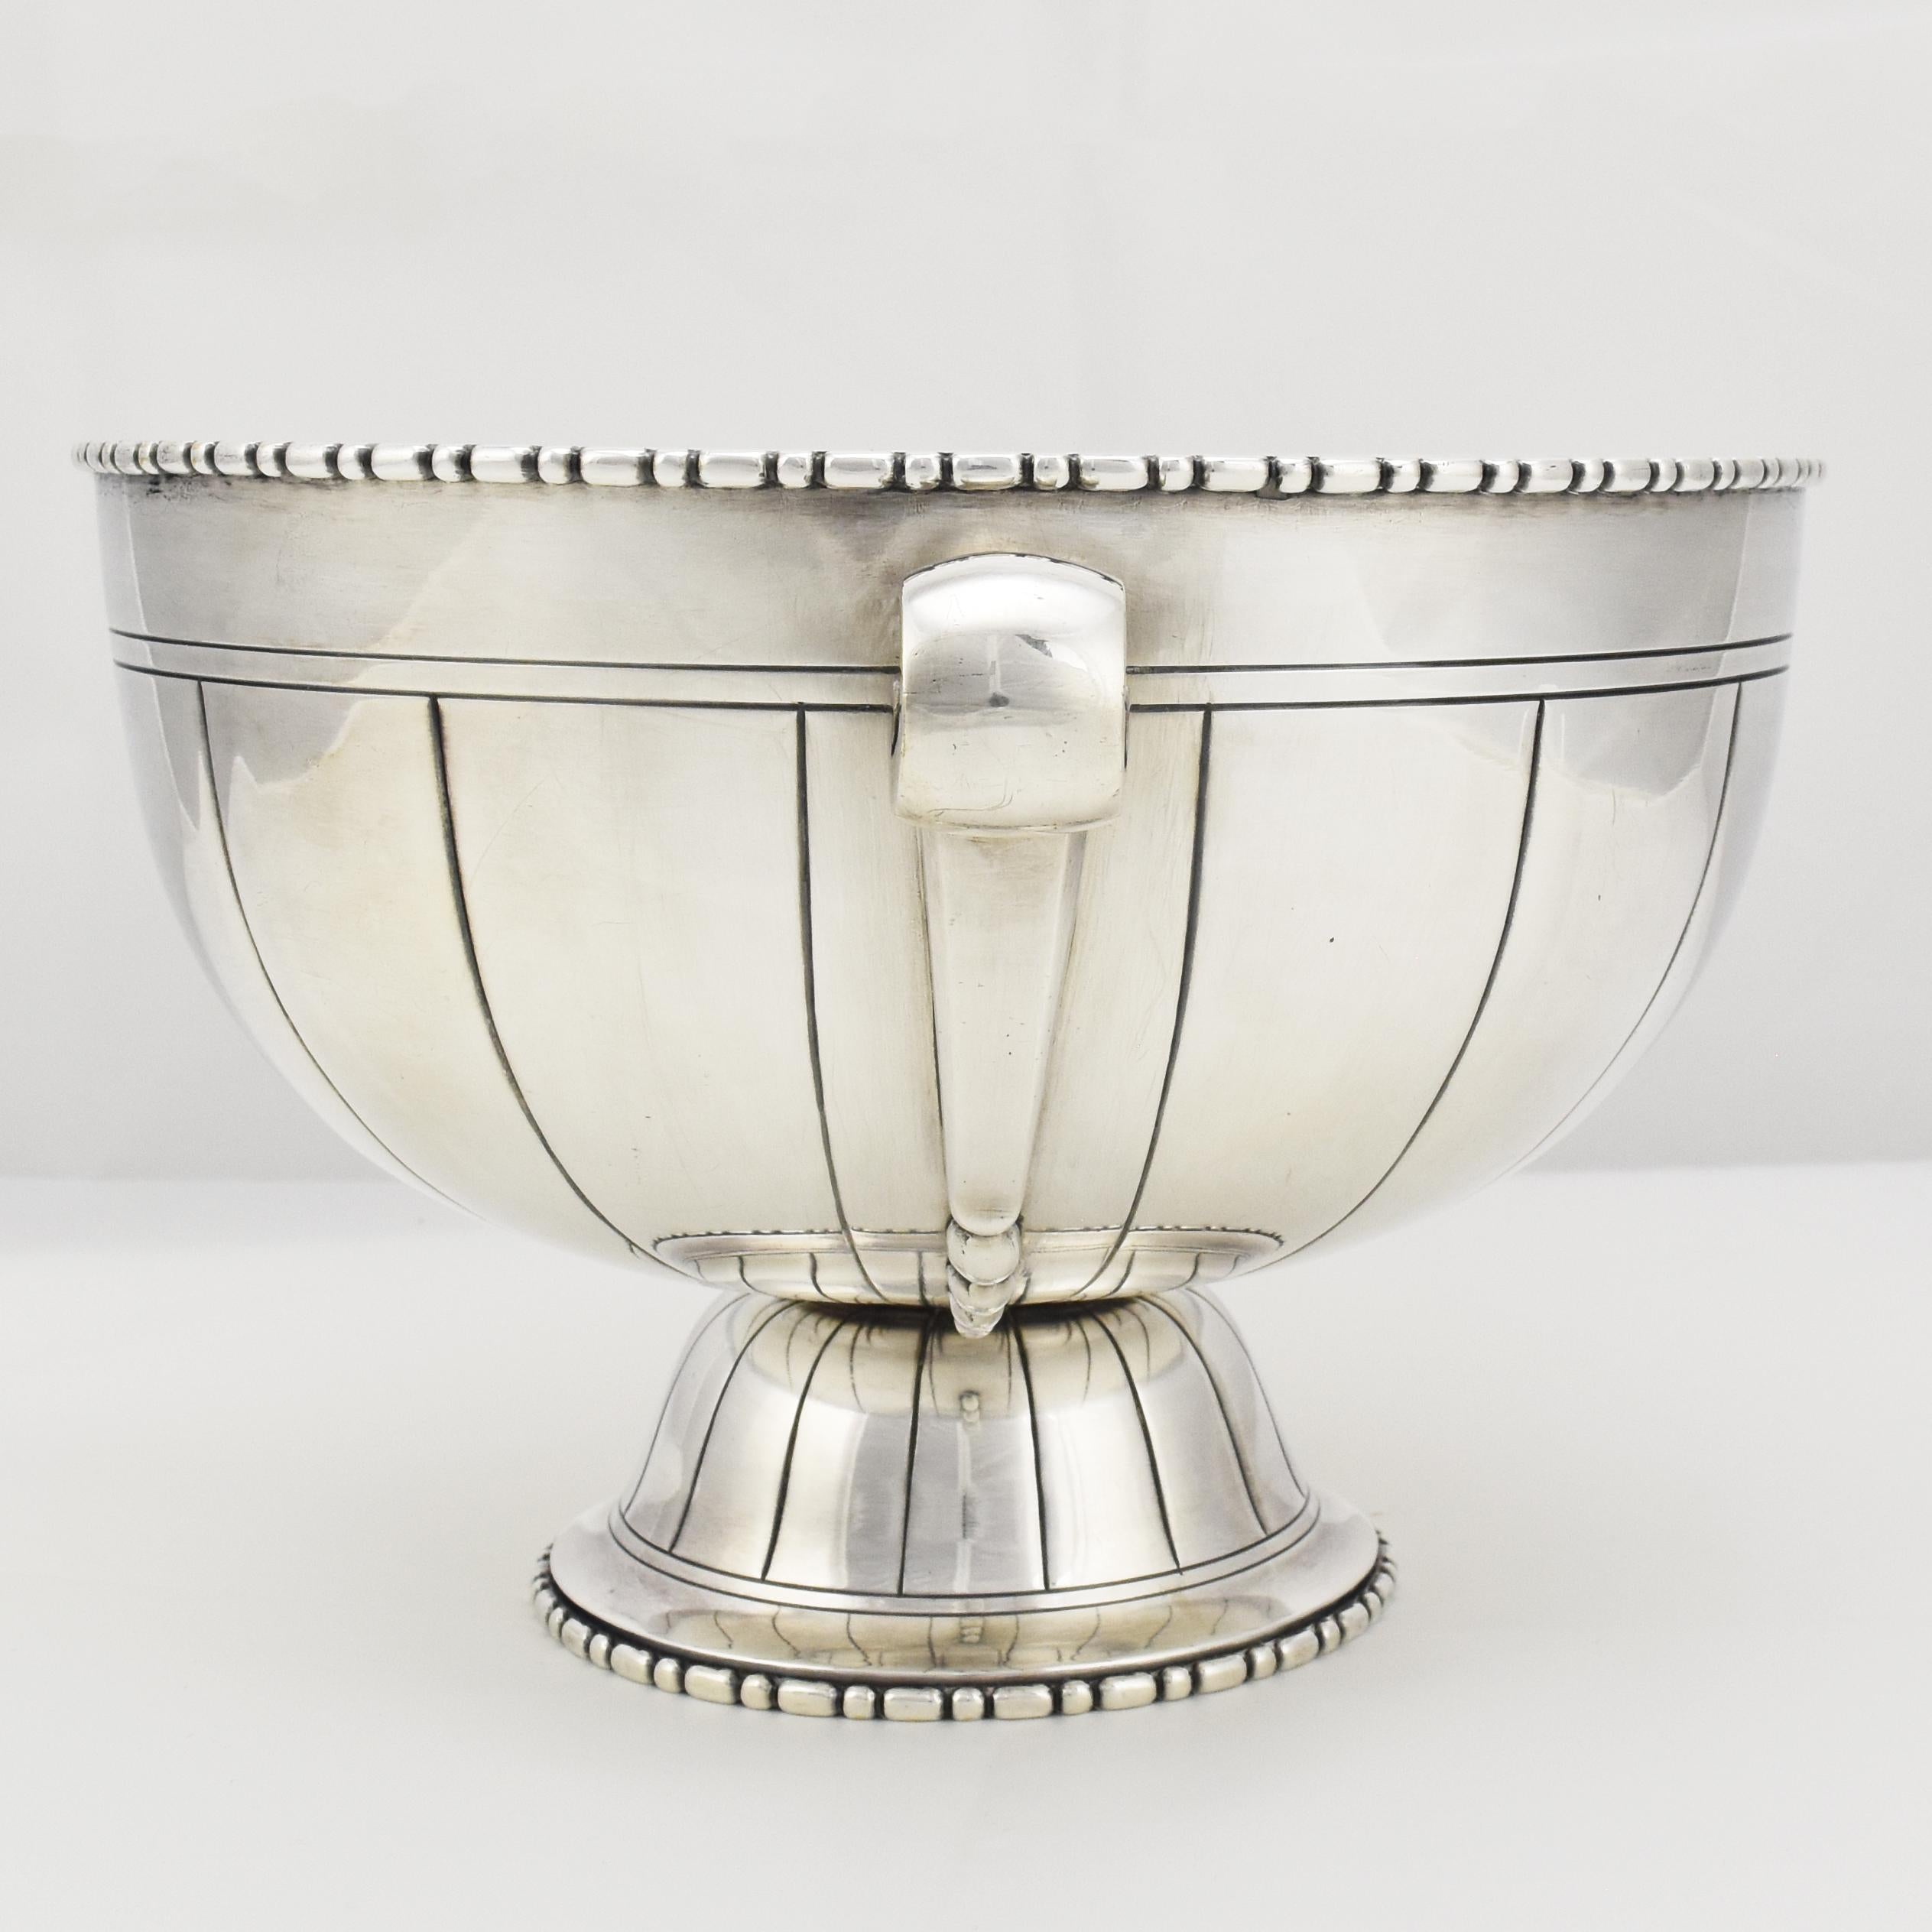 French Art Deco Centerpiece Silverplate Bowl by Bouillet & Bourdelle 1920s In Good Condition For Sale In Bad Säckingen, DE